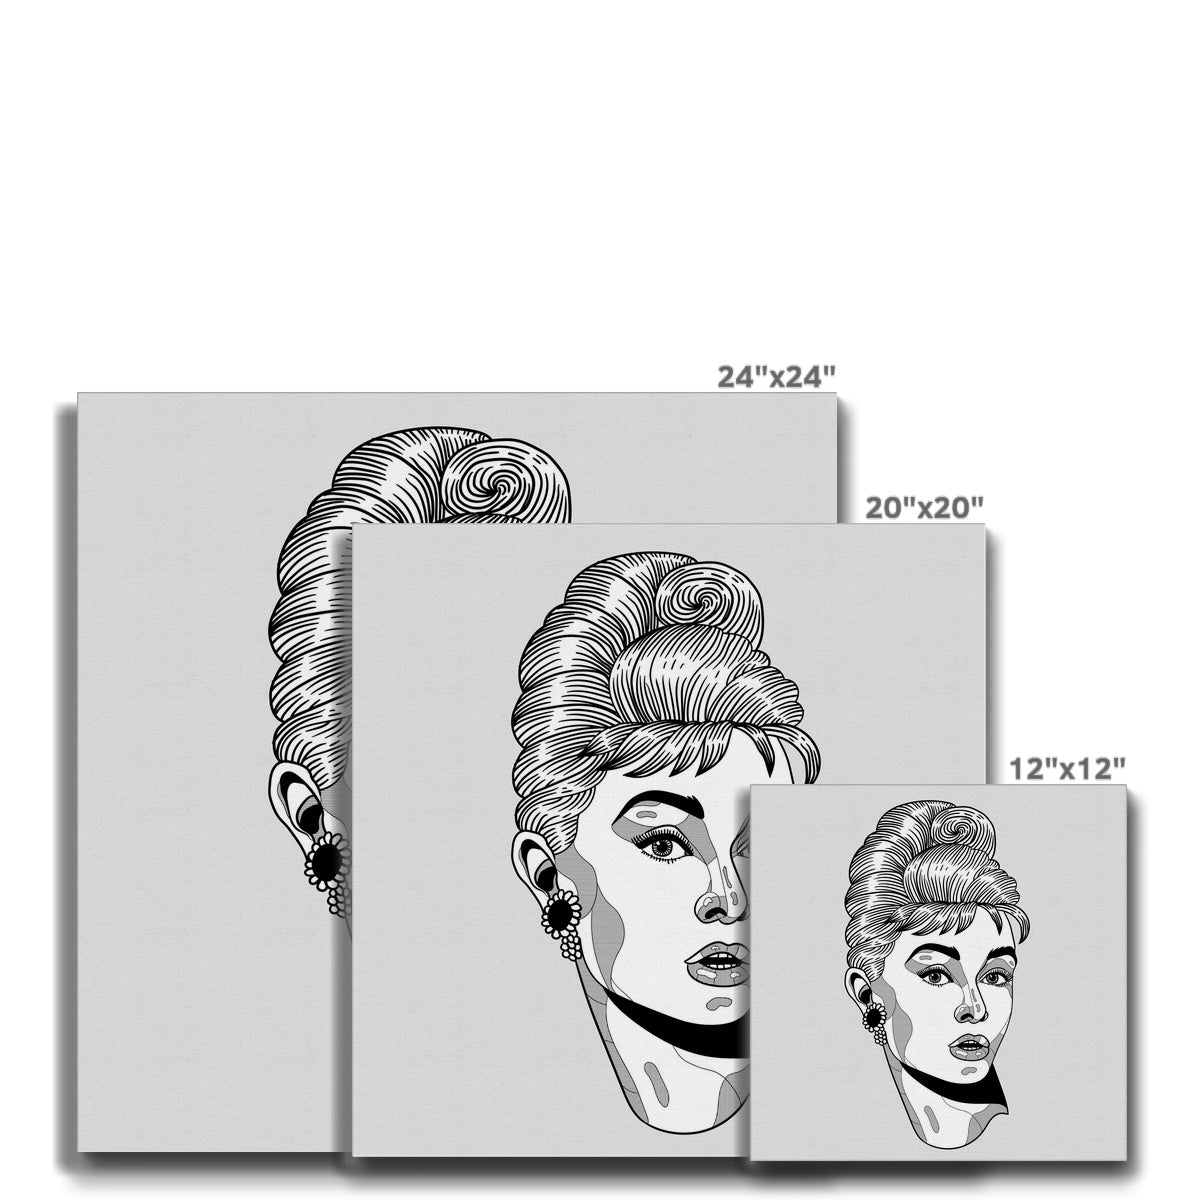 Grayscale Audrey Hepburn Illustration Canvas